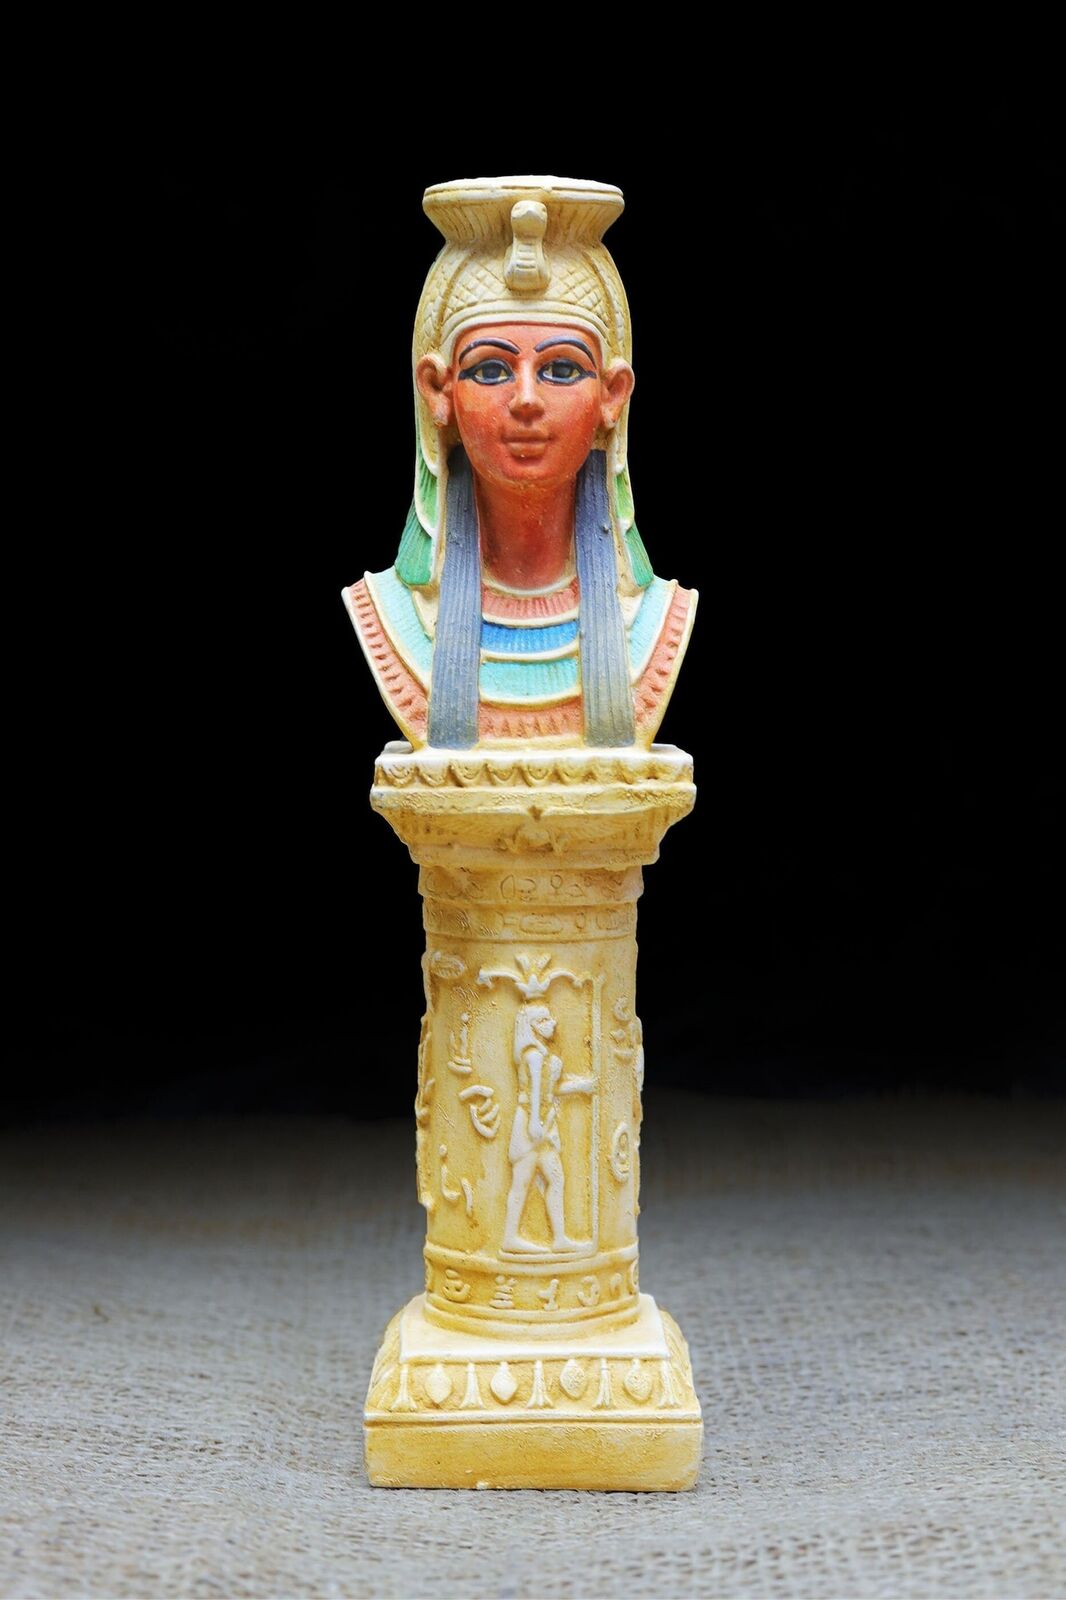 Regal Tribute: Handcrafted Queen Cleopatra Art Piece